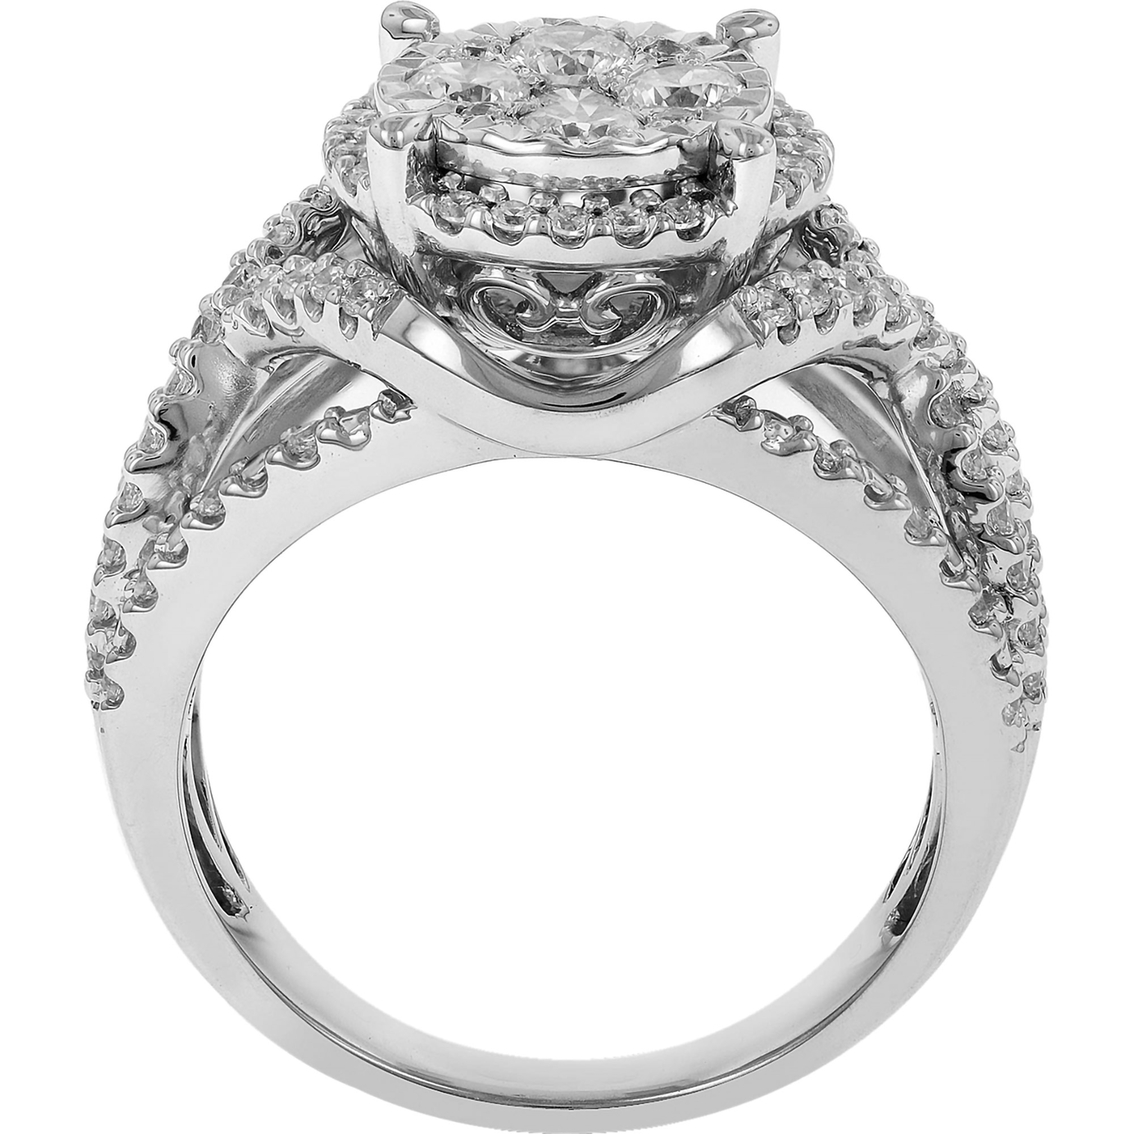 10K White Gold 1 CTW Diamond Ring, Size 7 - Image 2 of 3